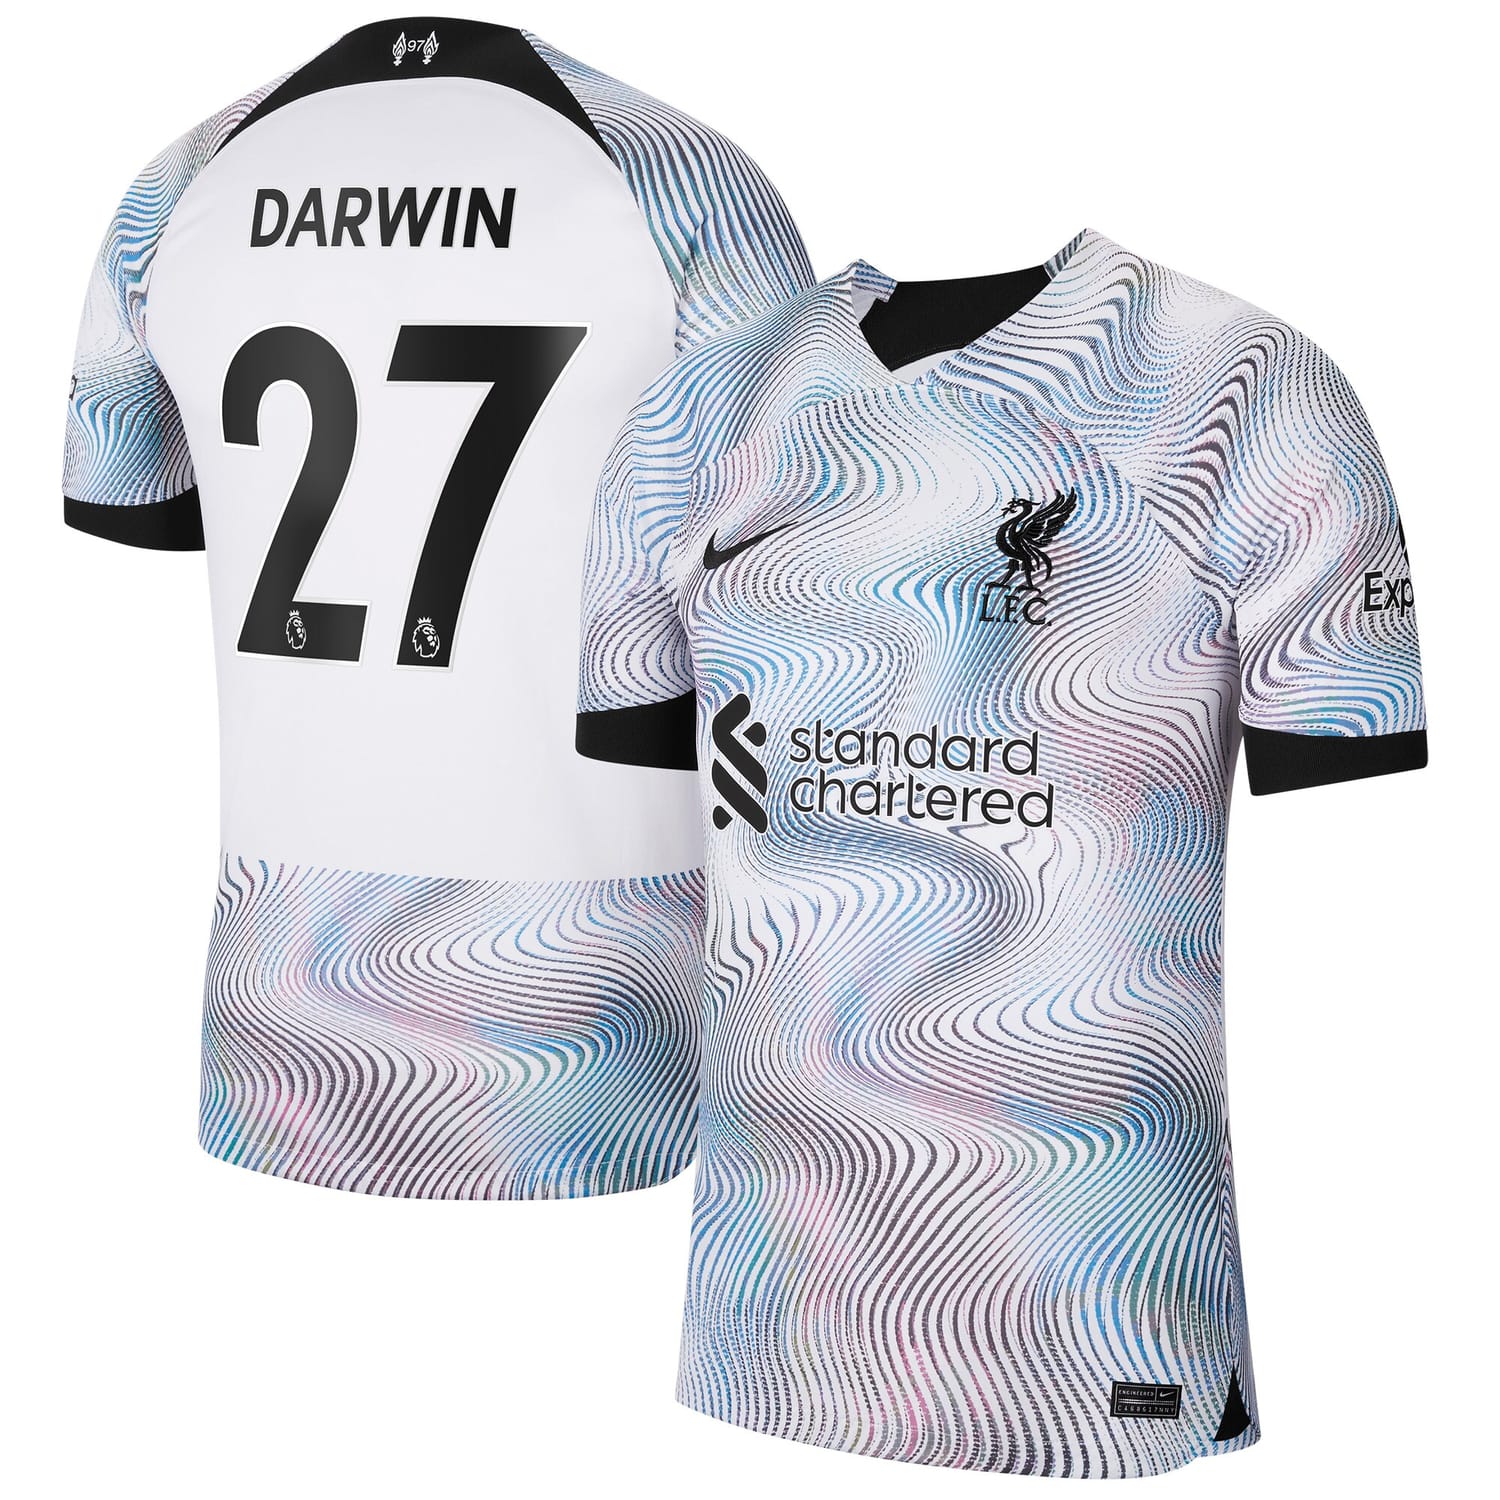 Premier League Liverpool Away Jersey Shirt White 2022-23 player Darwin Núñez printing for Men